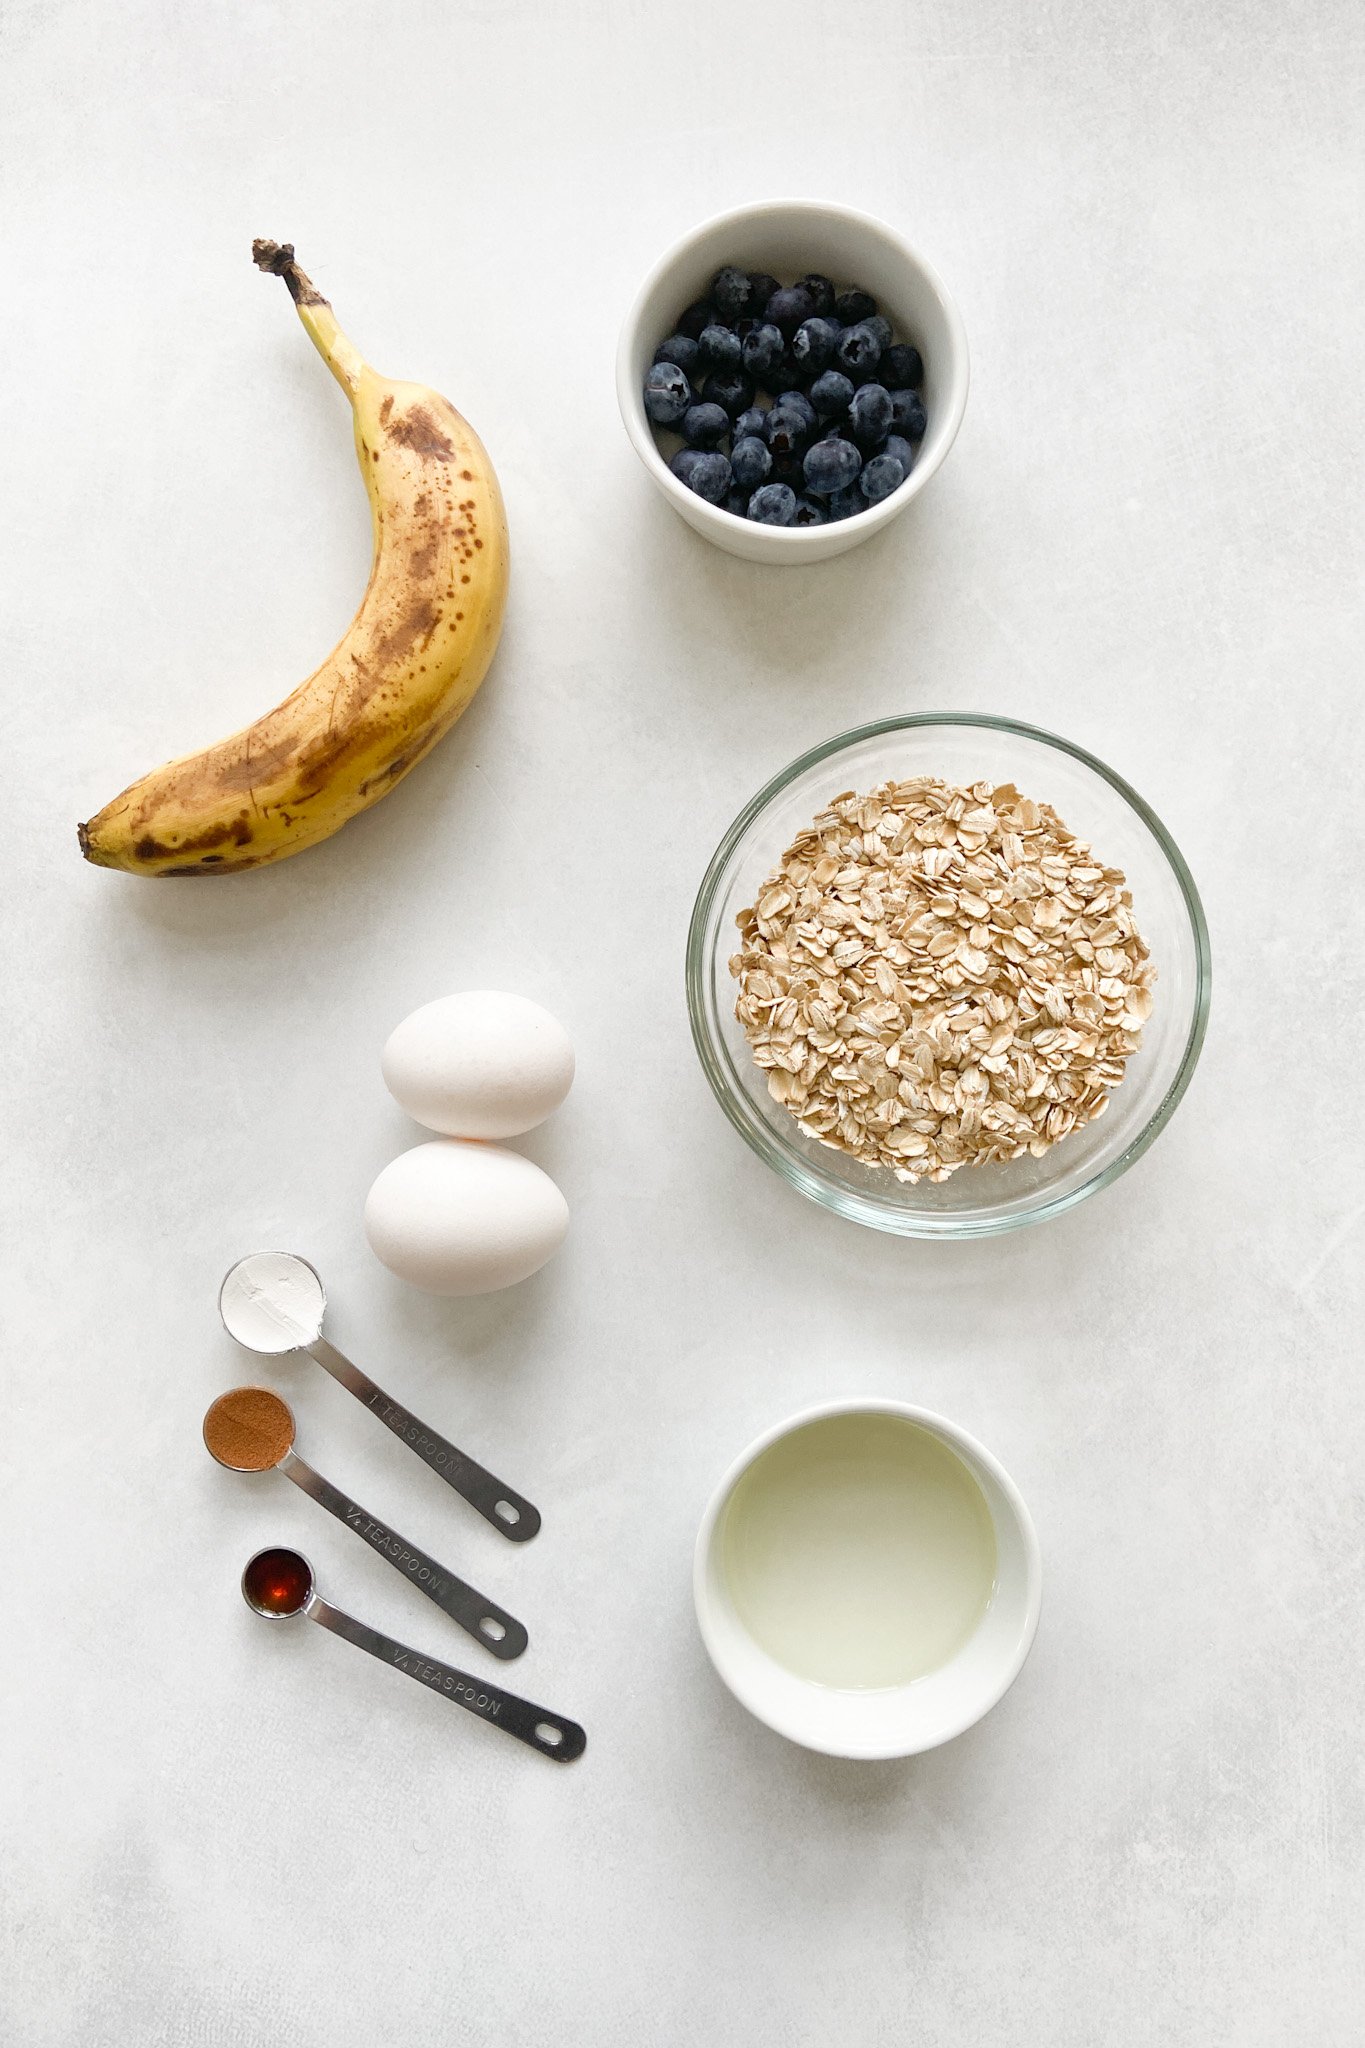 Ingredients to make blueberry banana waffles